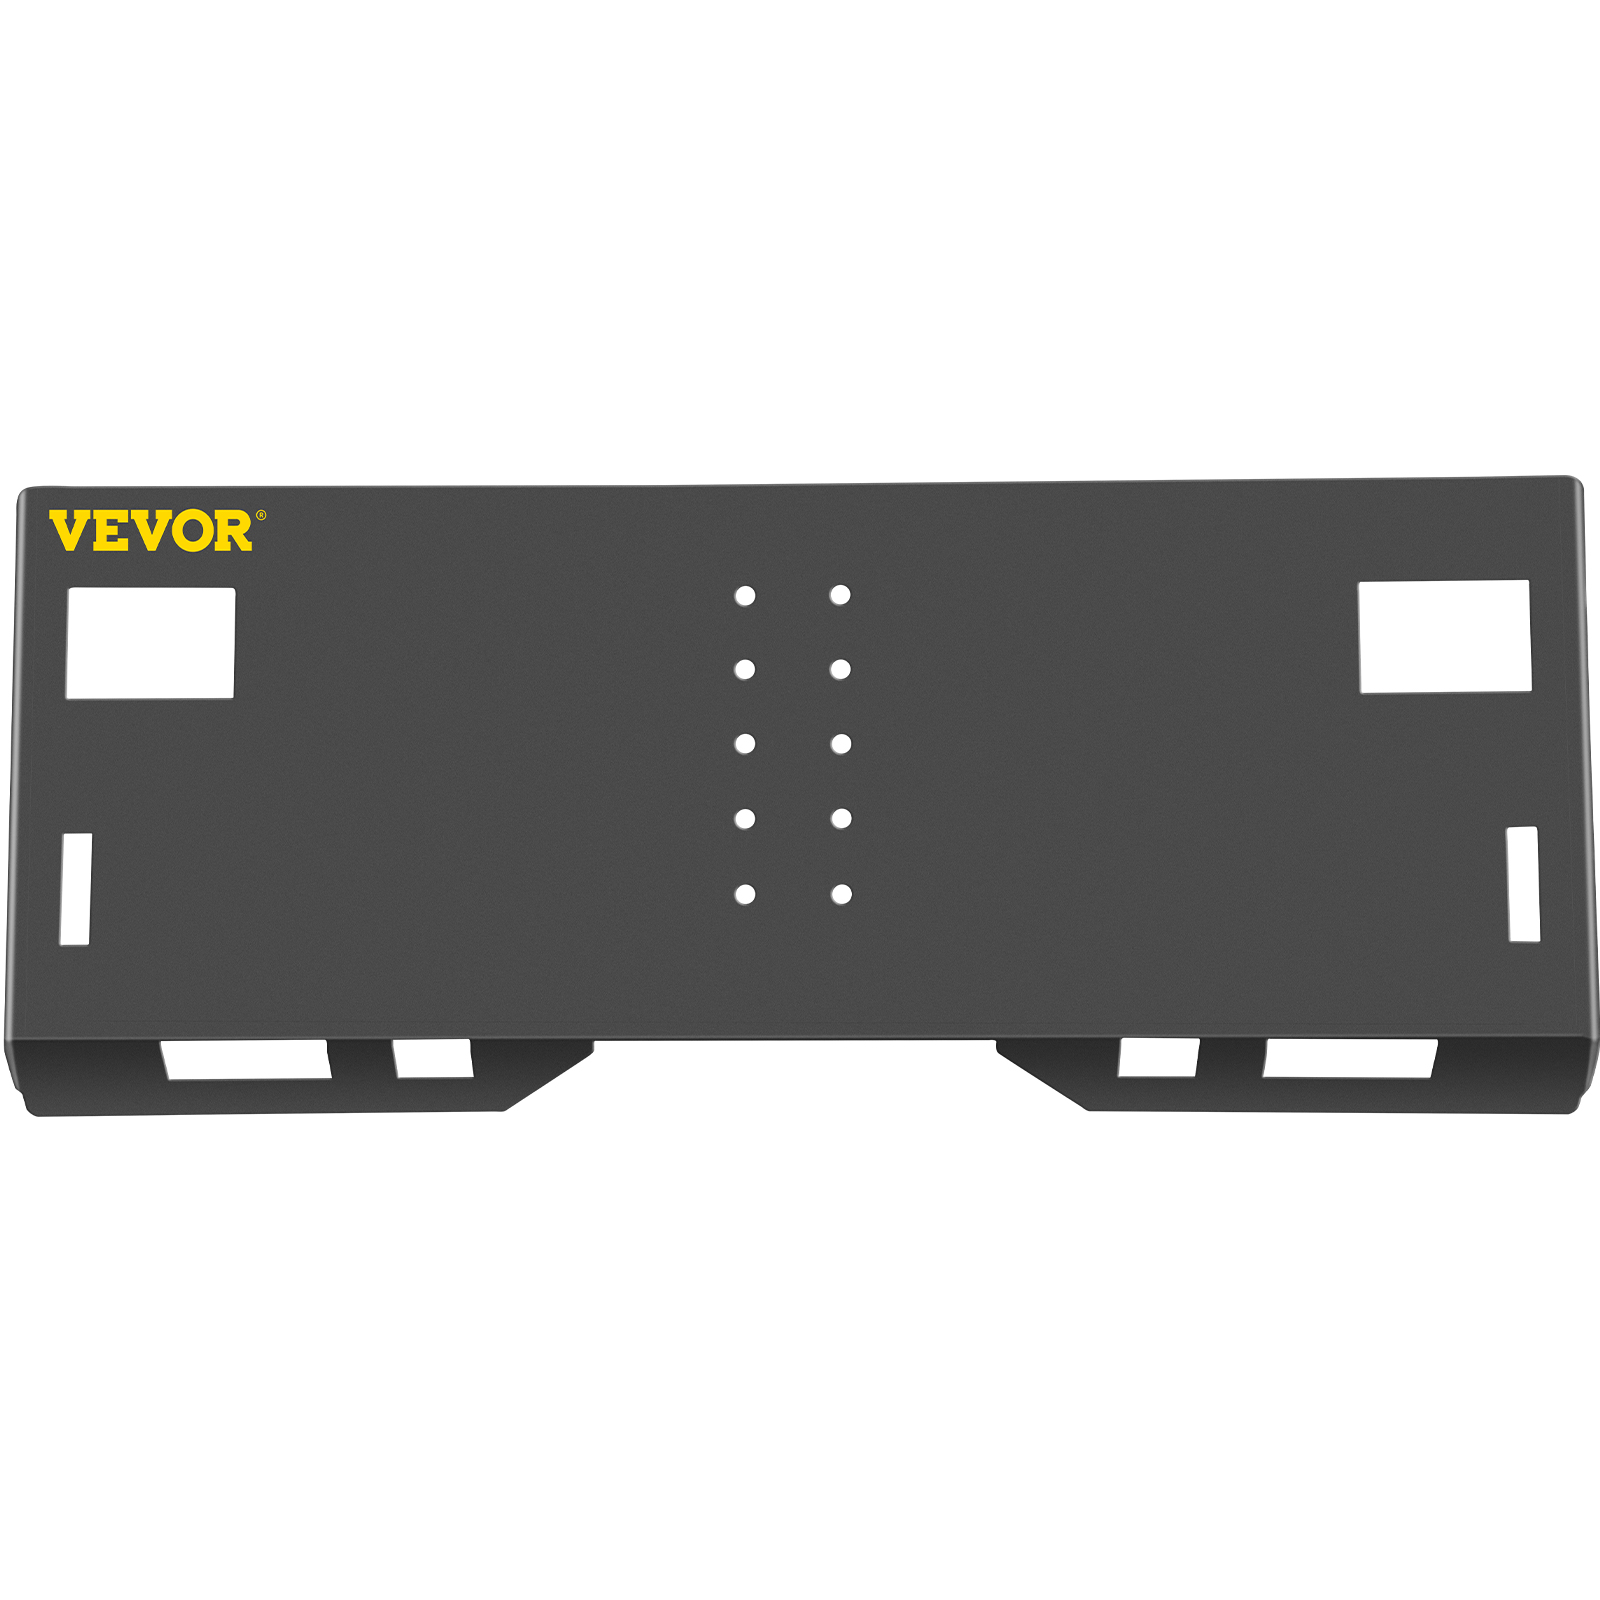 Vevor Universal Quick Tach Skid Steer Mount Plate 3/16" Adapter Loader W/holes от Vevor Many GEOs